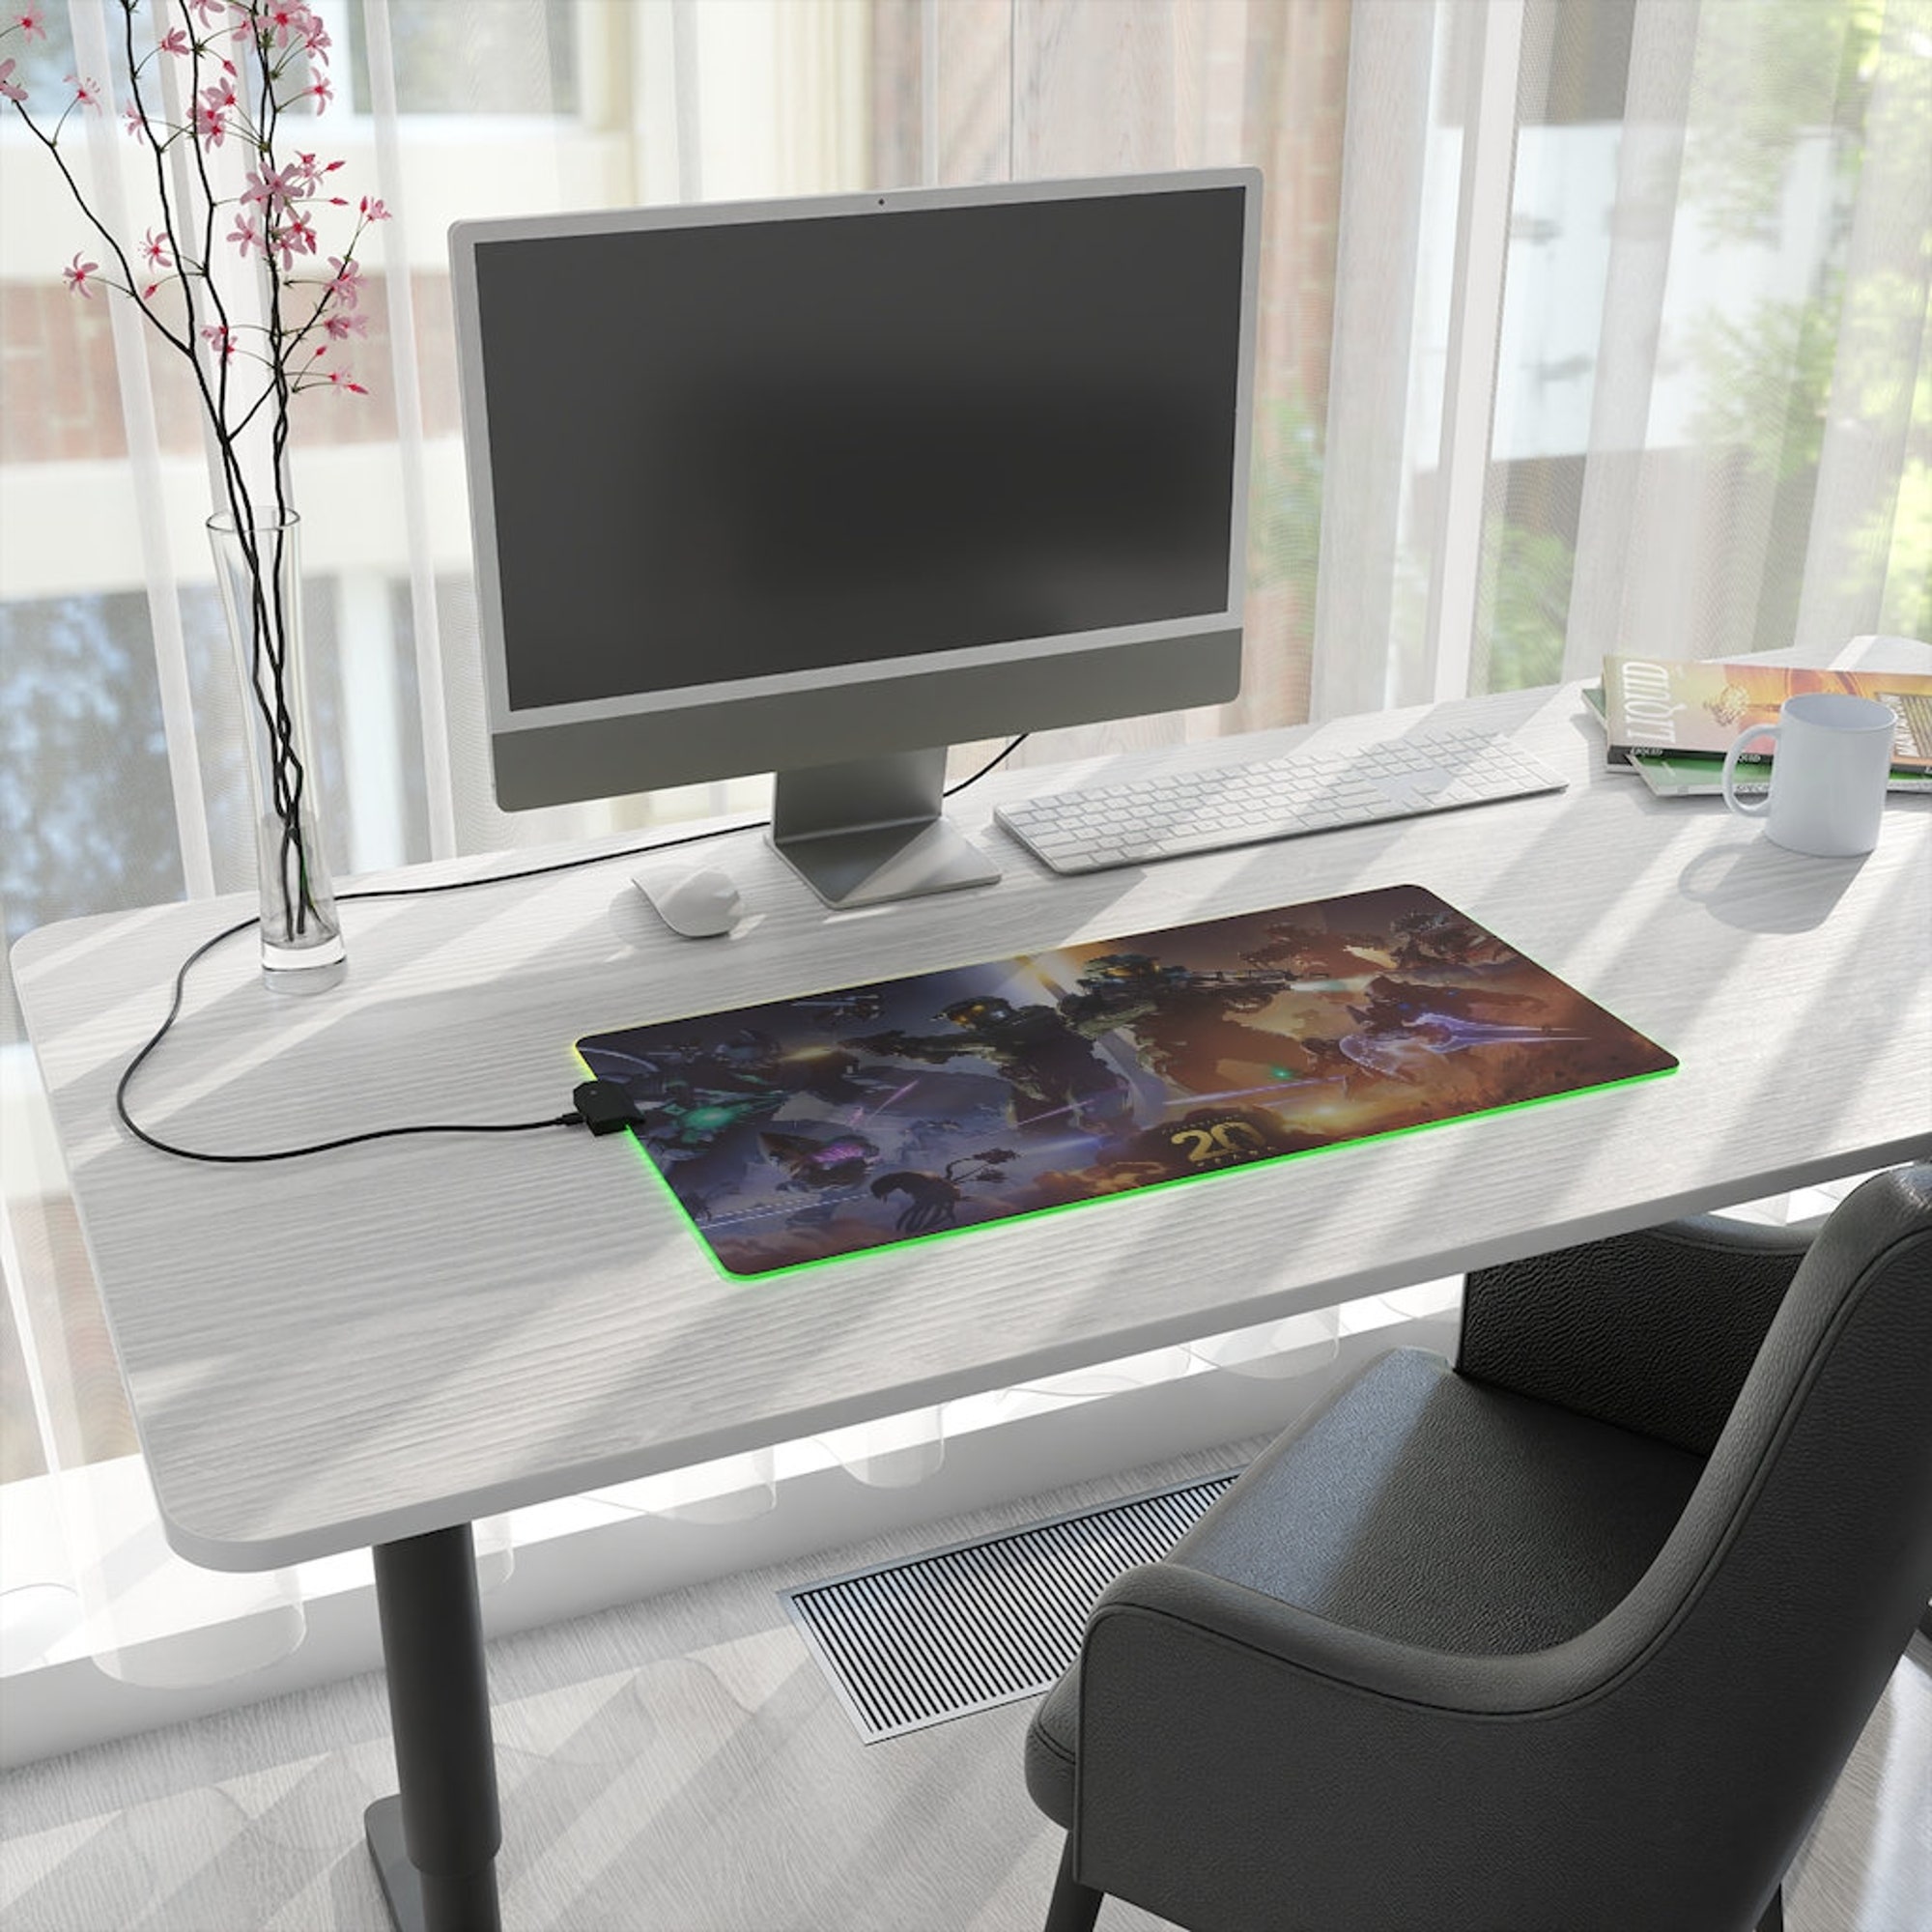 Halo RGB Desk Mat | Halo 20th Anniversary LED Desk Mat | Celebrating 20 years Rgb Halo Mouse Pad | Led Gaming Mouse Pad